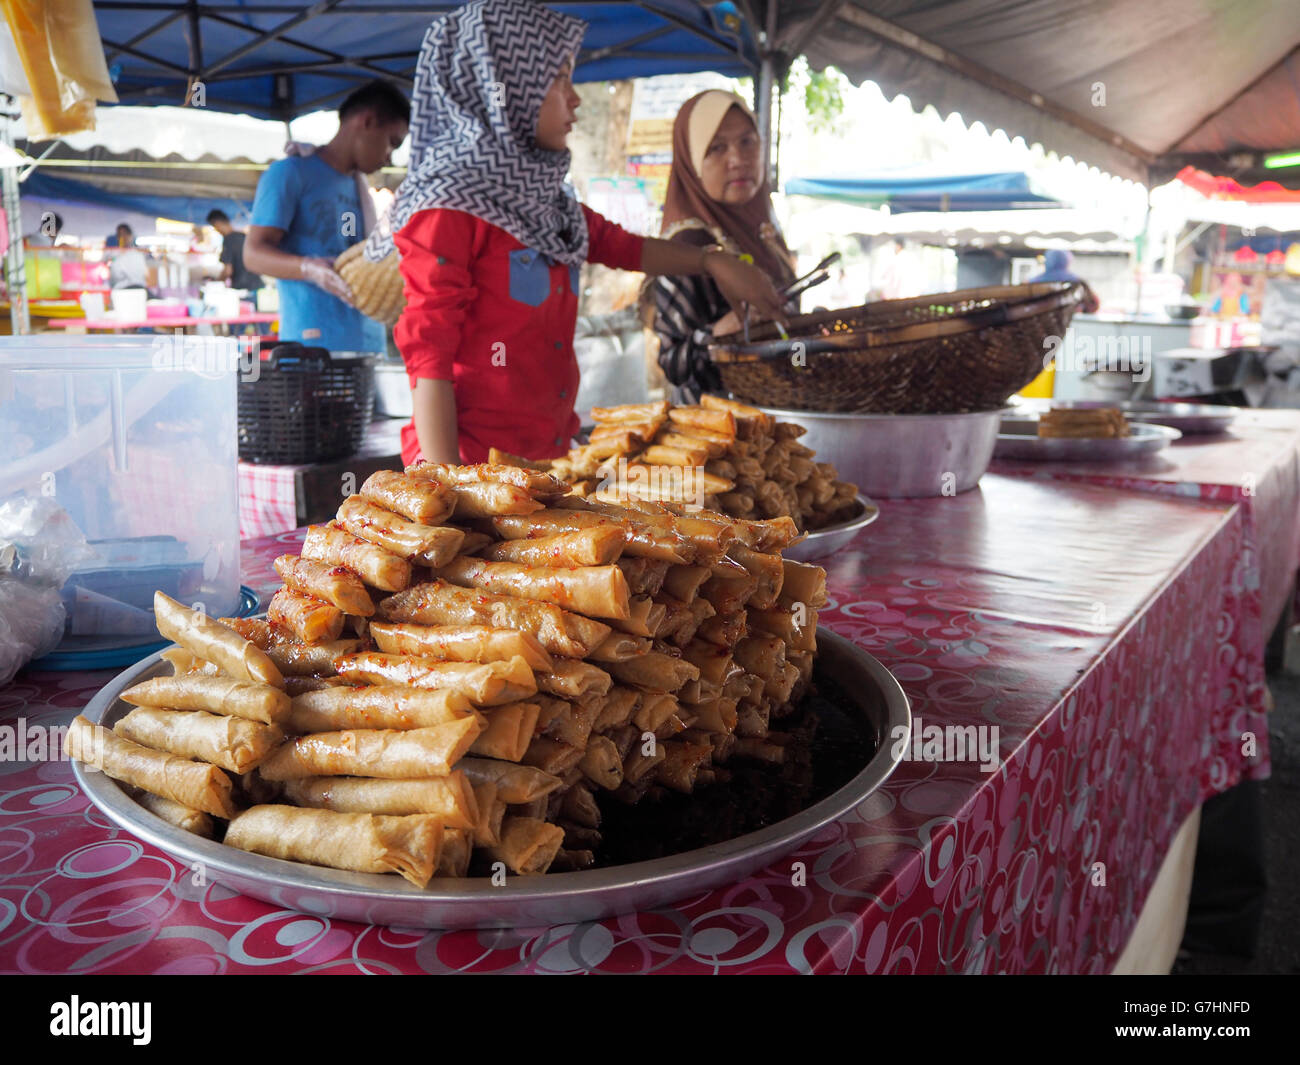 Food bazaar during the Muslim fasting month of Ramadan in Malaysia. Stock Photo